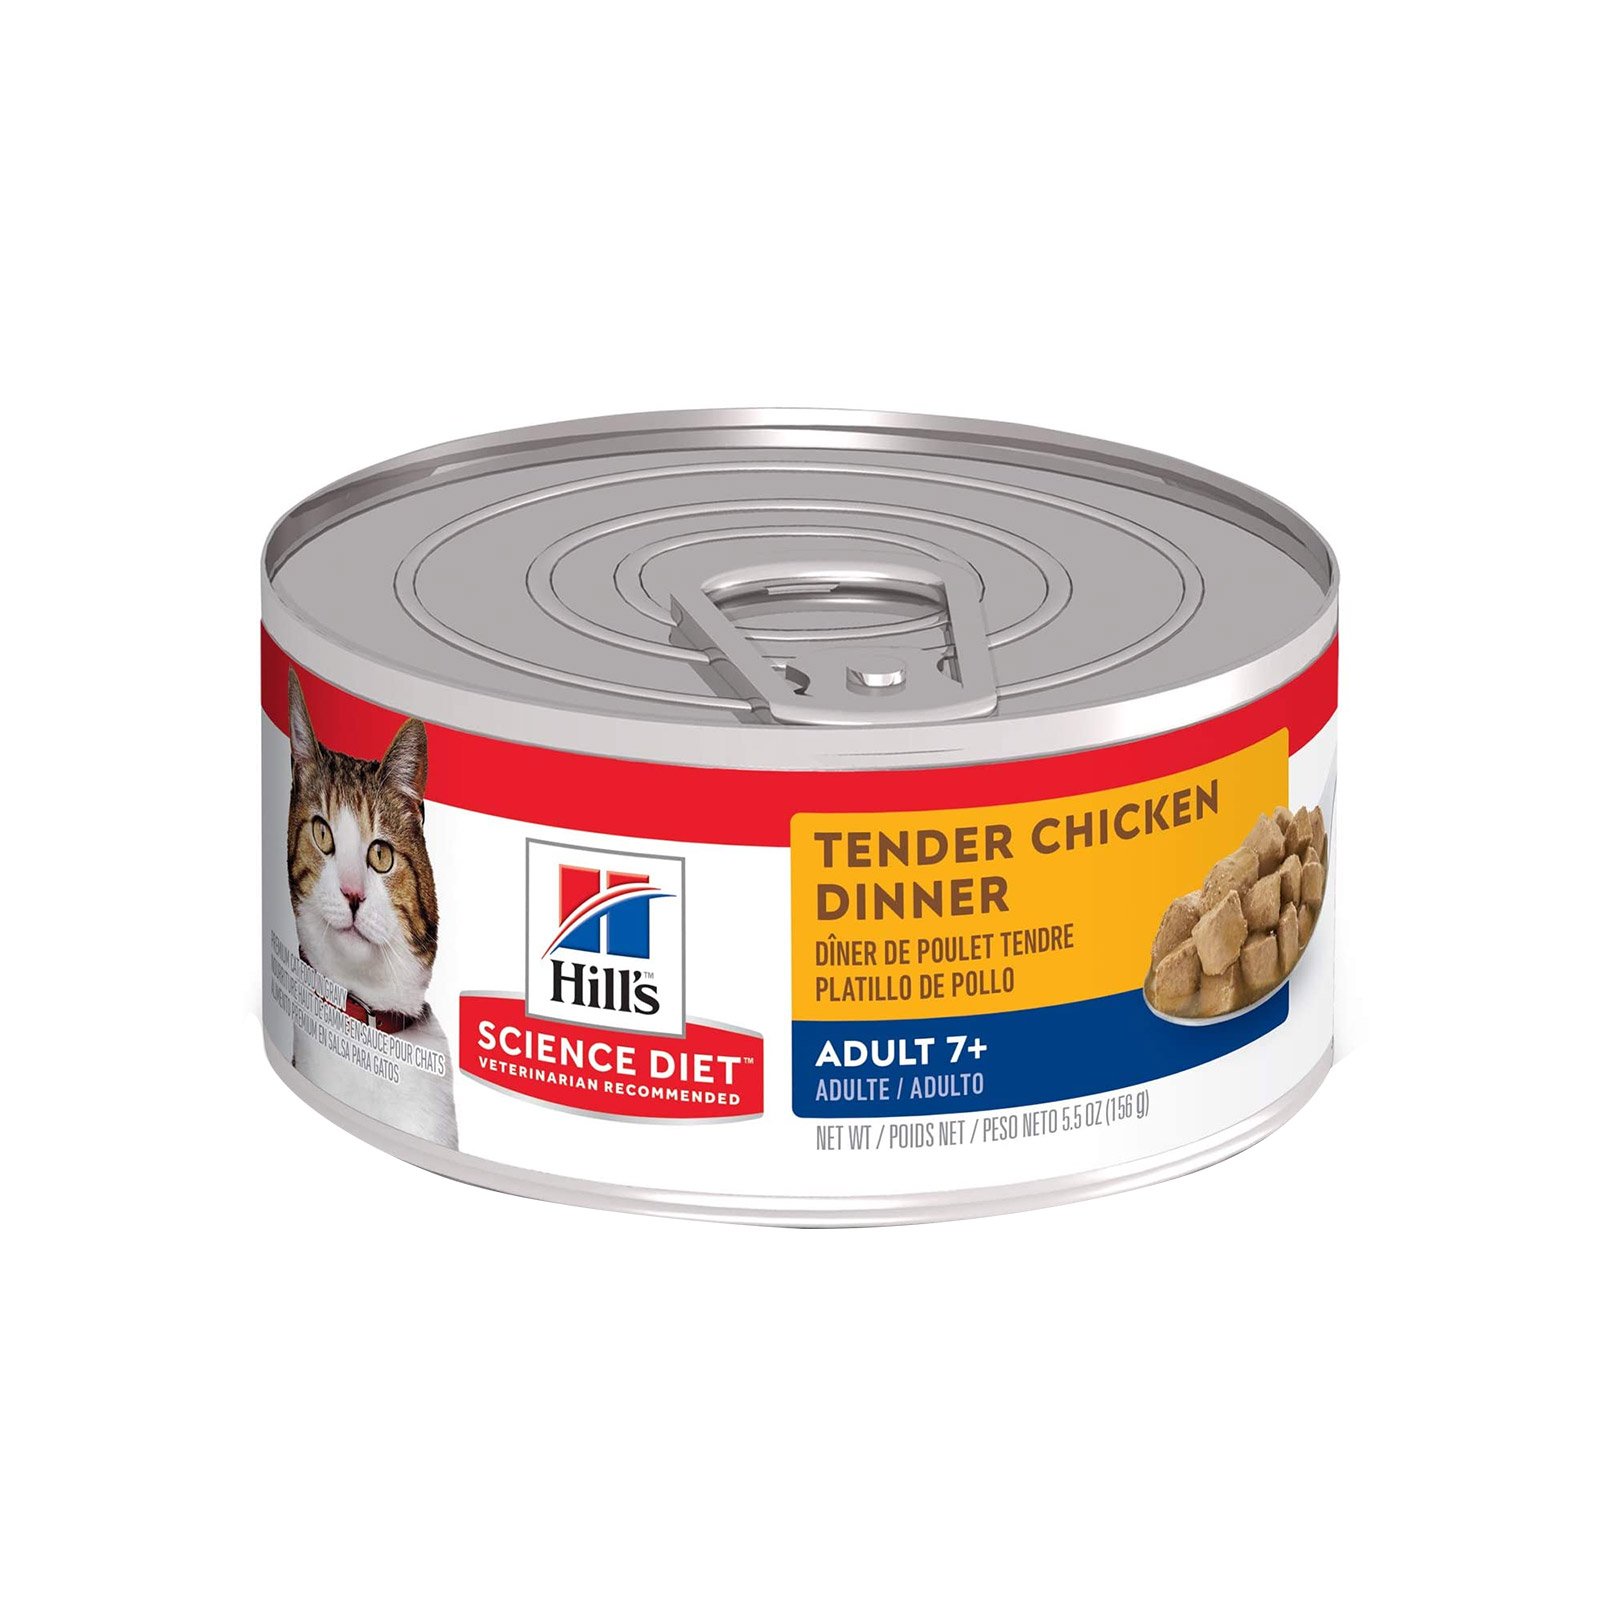 Hill's Science Diet Adult 7+ Tender Chicken Dinner Senior Canned Wet Cat Food